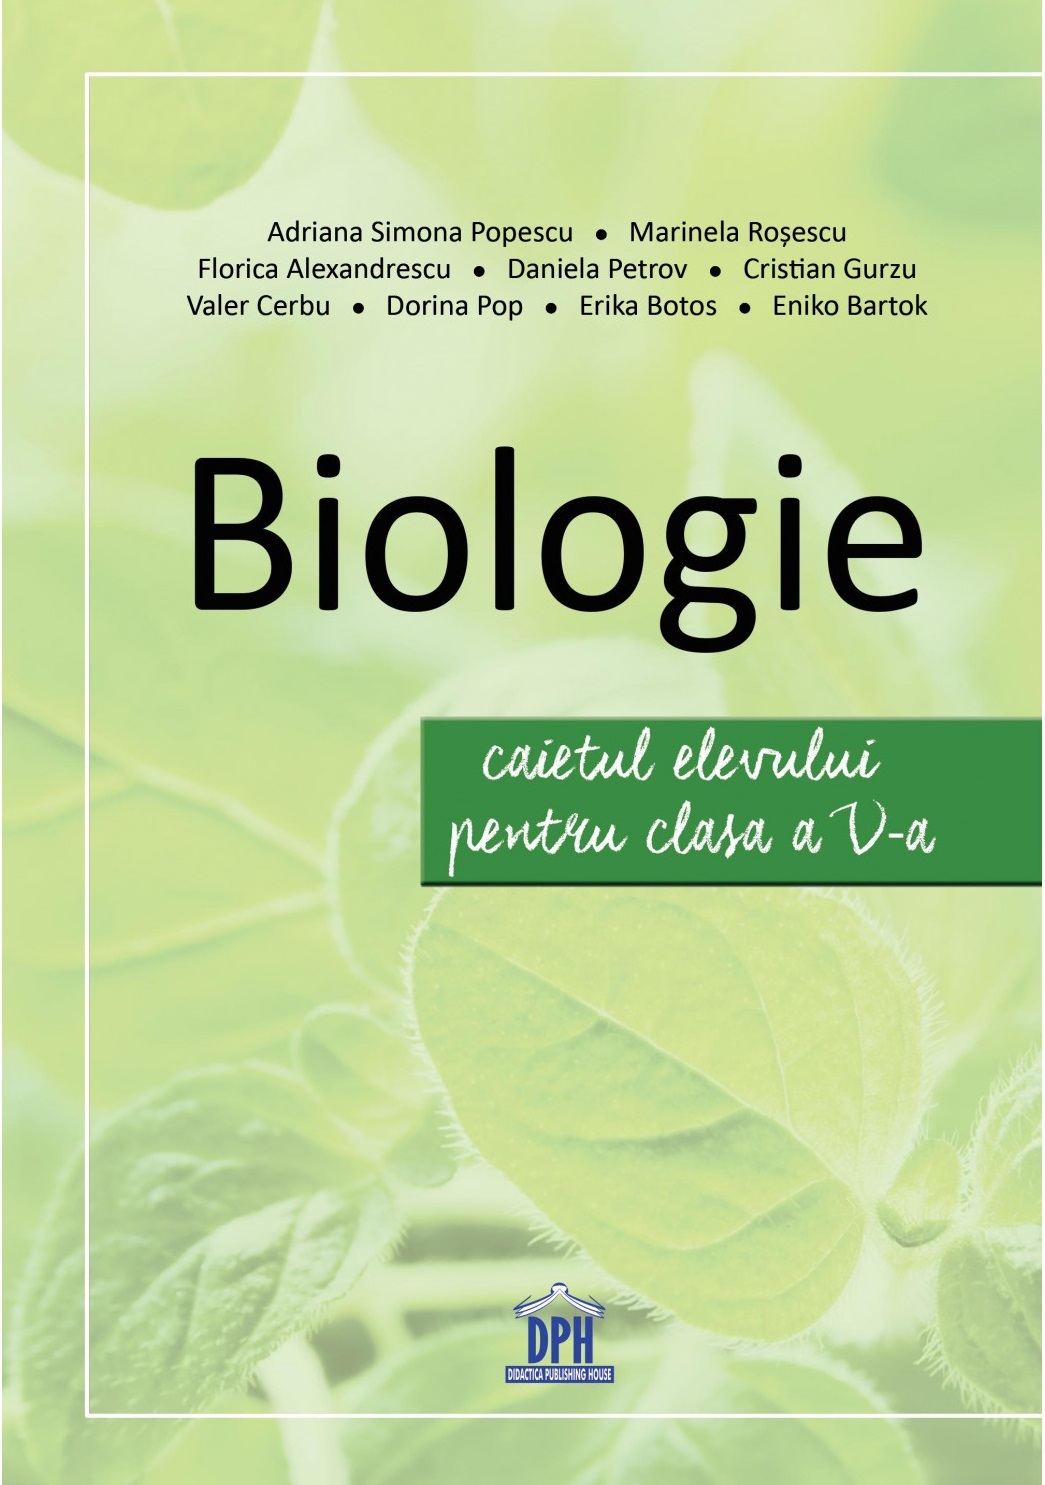 Biologie - Caietul elevului pentru clasa a V-a | Adriana Simona Popescu, Marinela Rosescu, Florica Alexandrescu